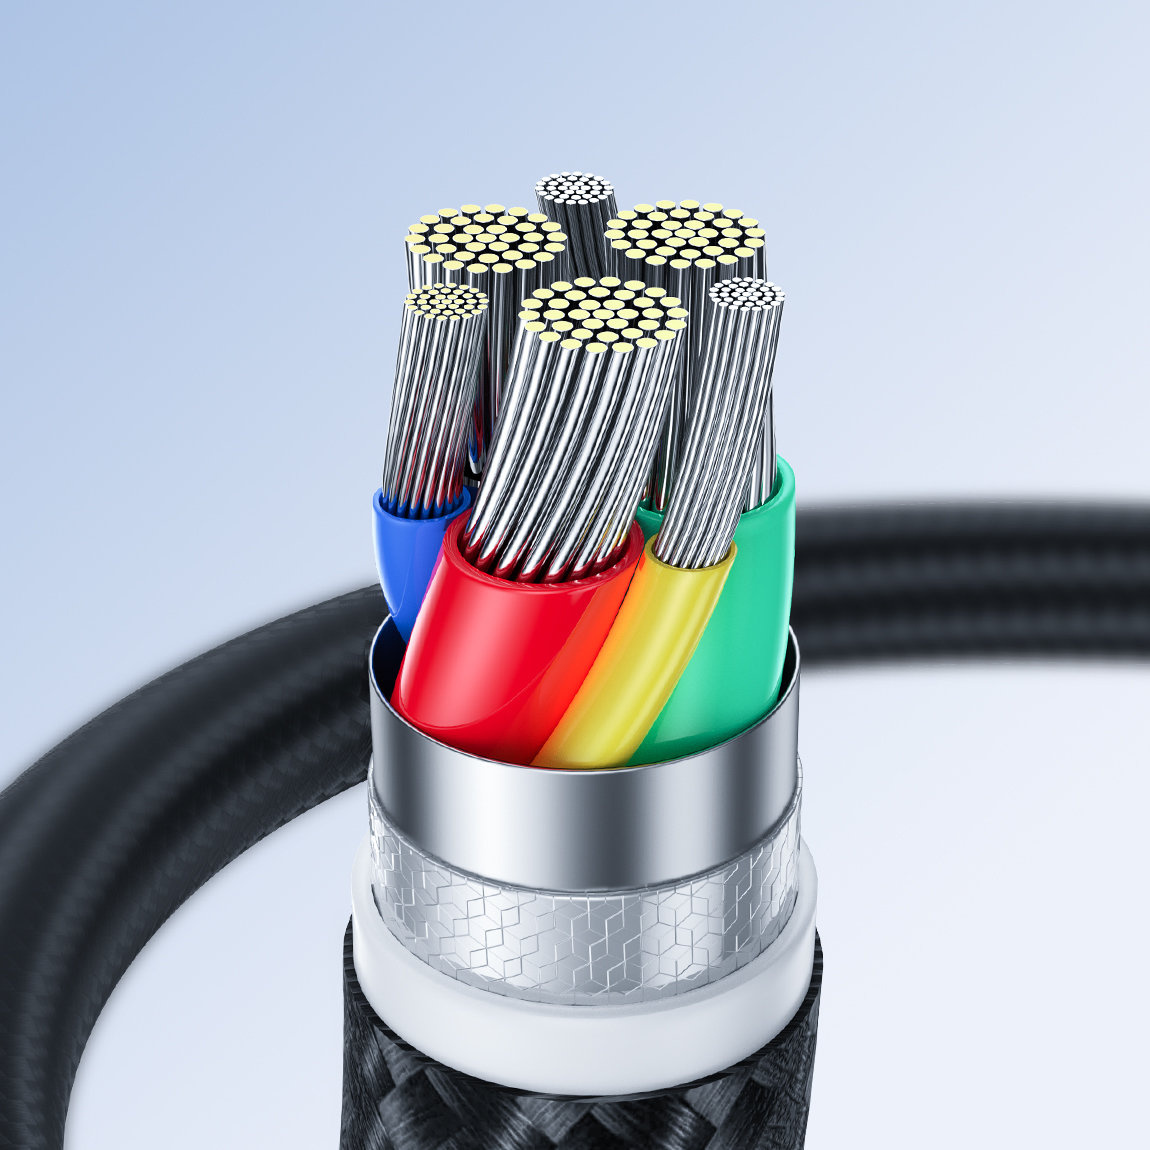 Cable Joyroom Surpass Series USB-C/Lightning 20W 0.25m black